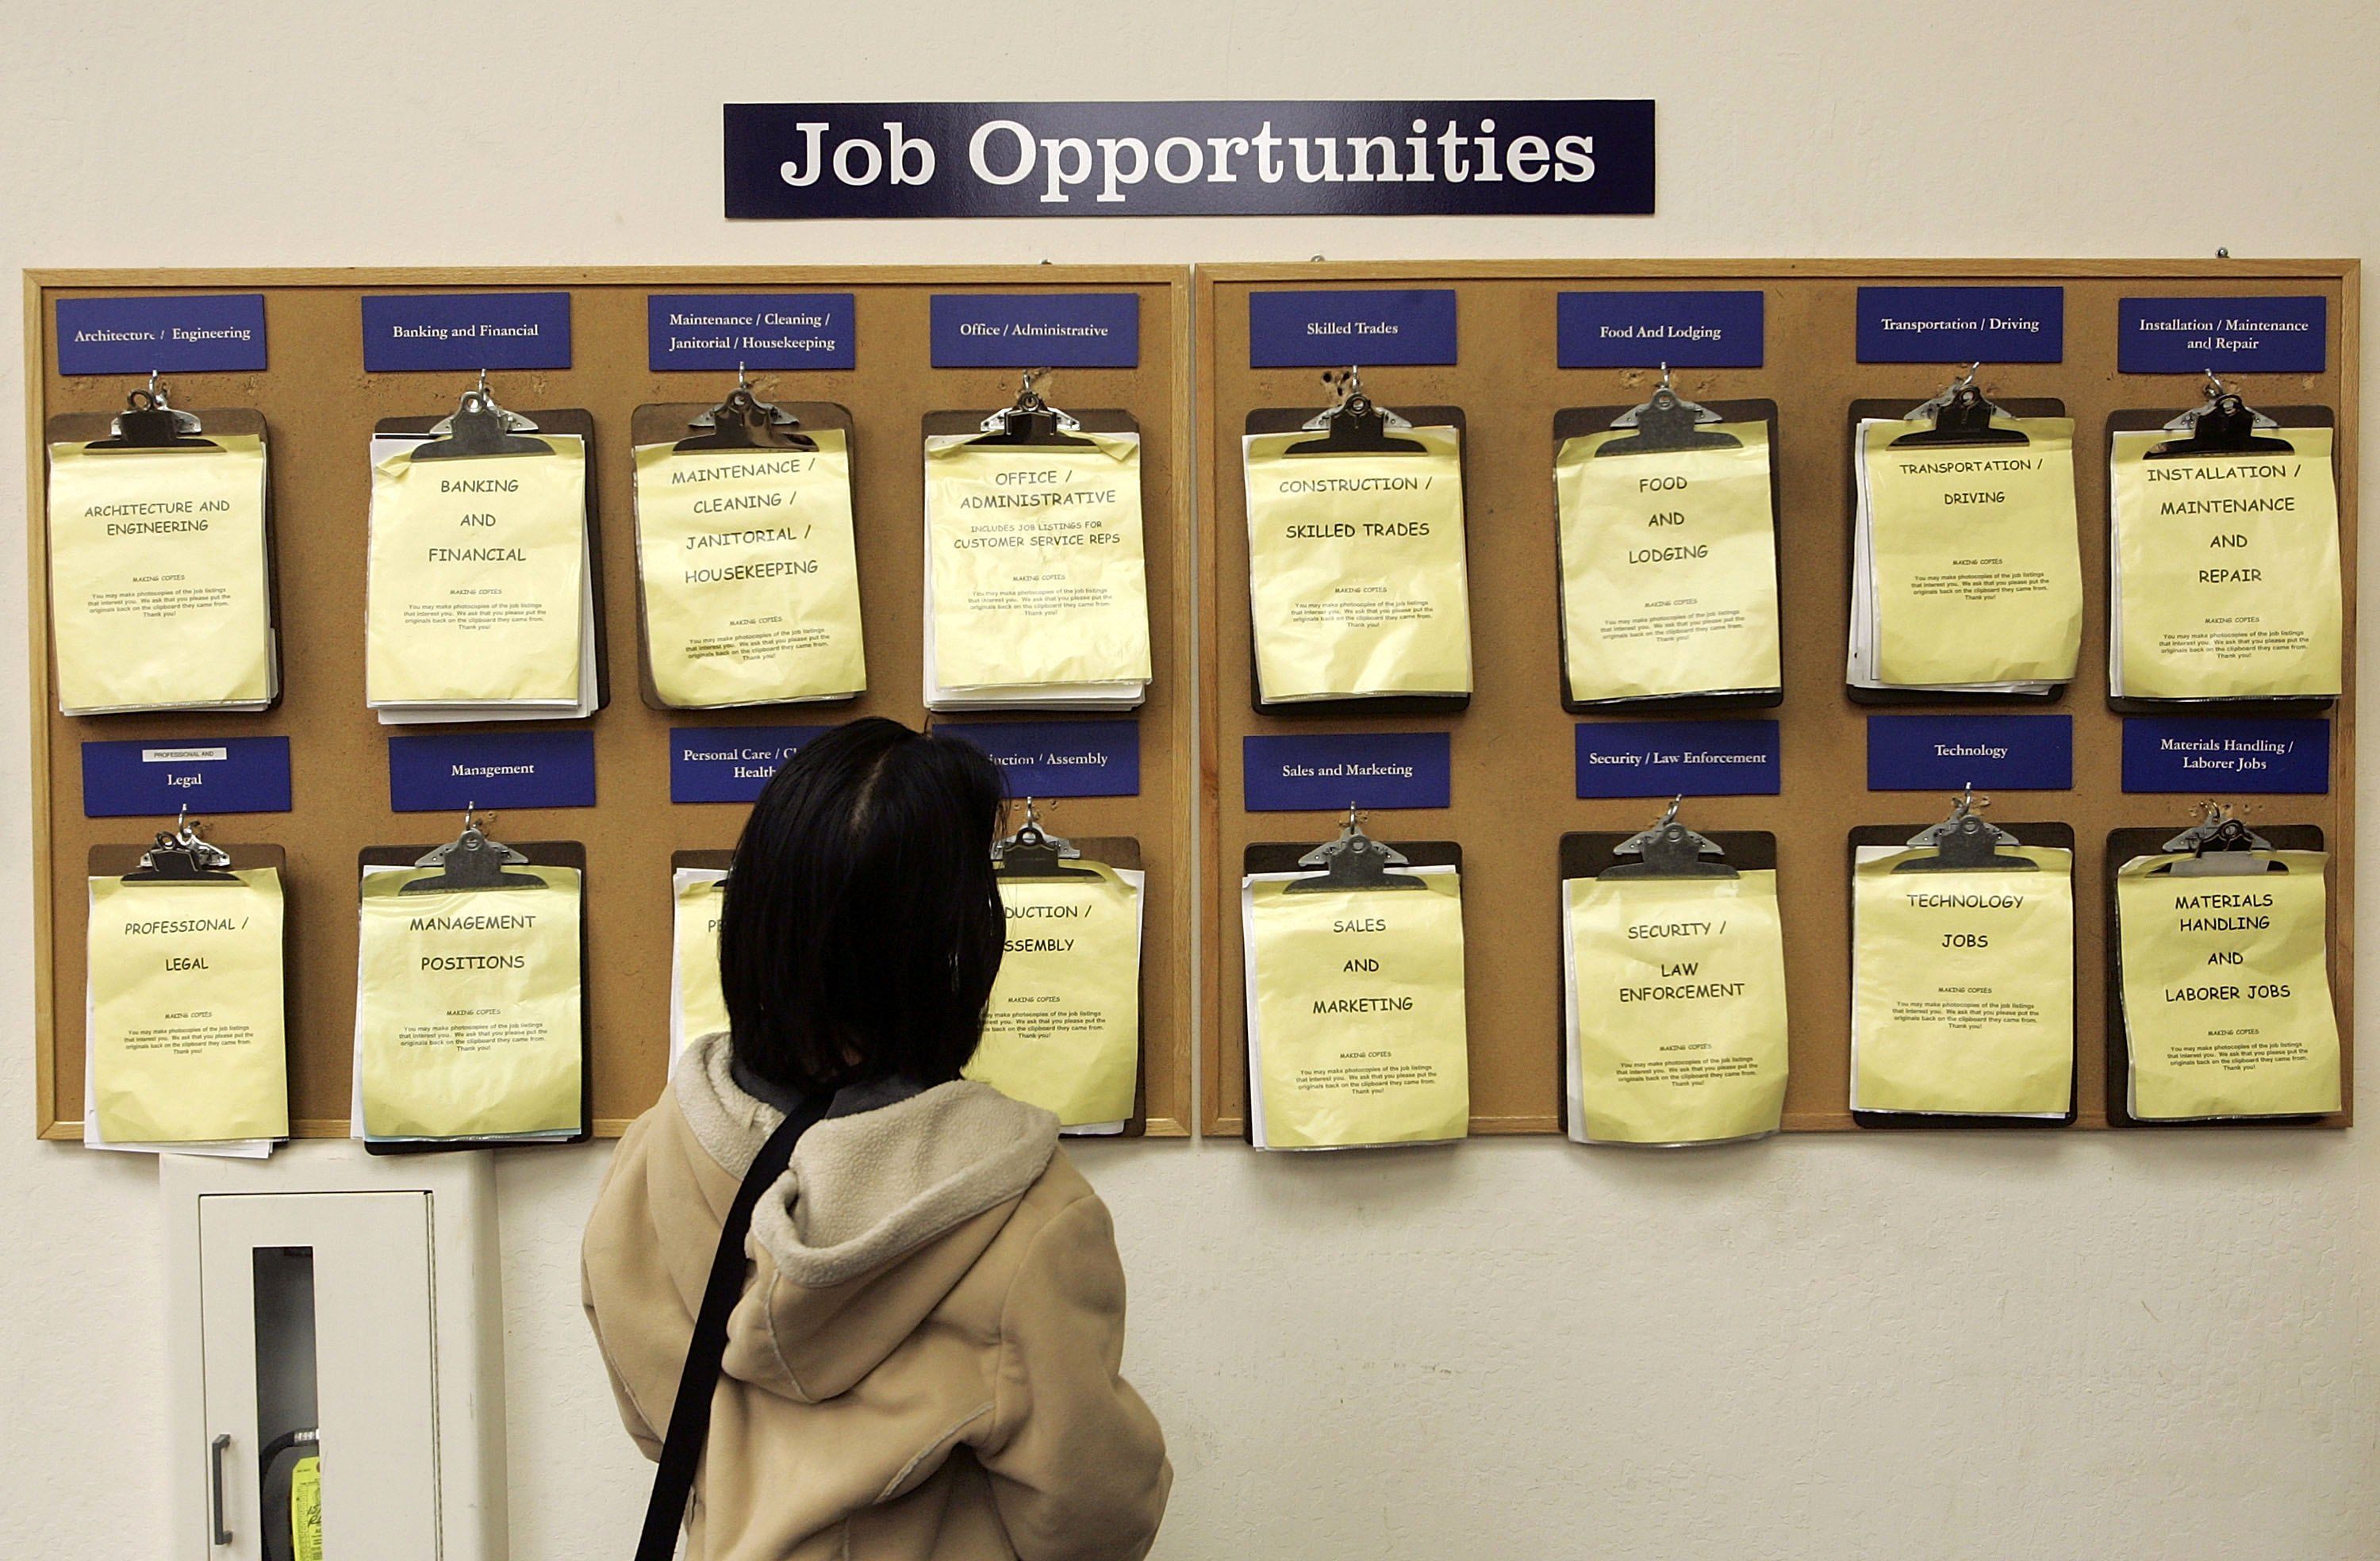 Image shows a jobseeker looking at a board of job vacancies.